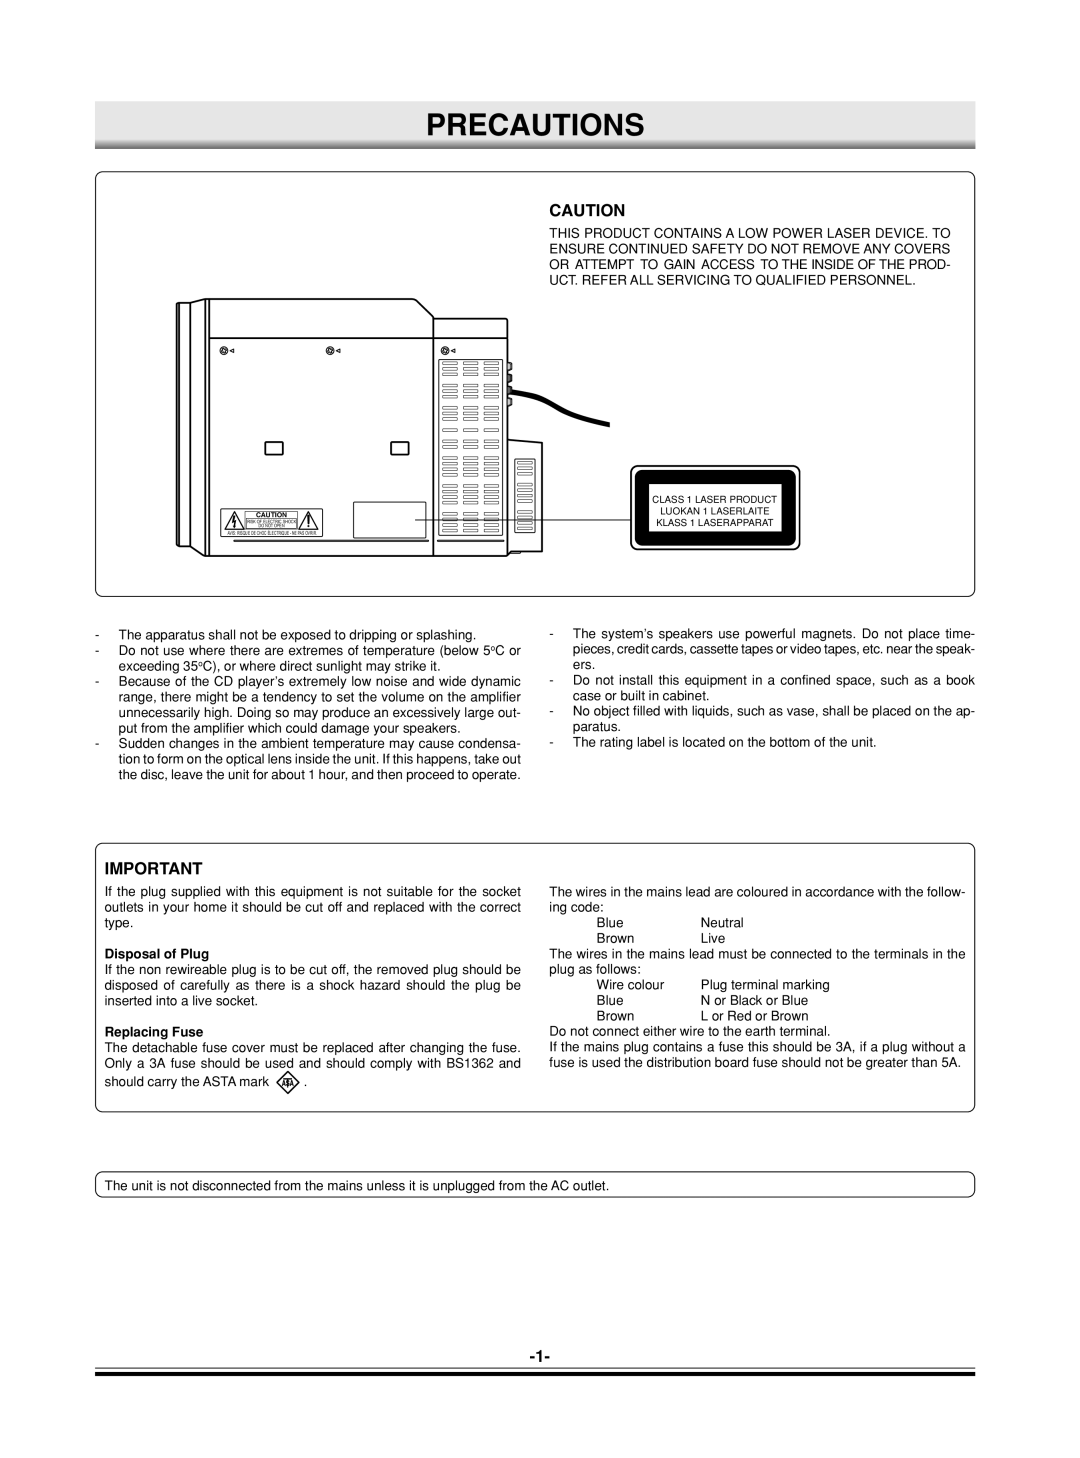 Sanyo DC-MP9500 instruction manual Precautions, Disposal of Plug, Replacing Fuse 